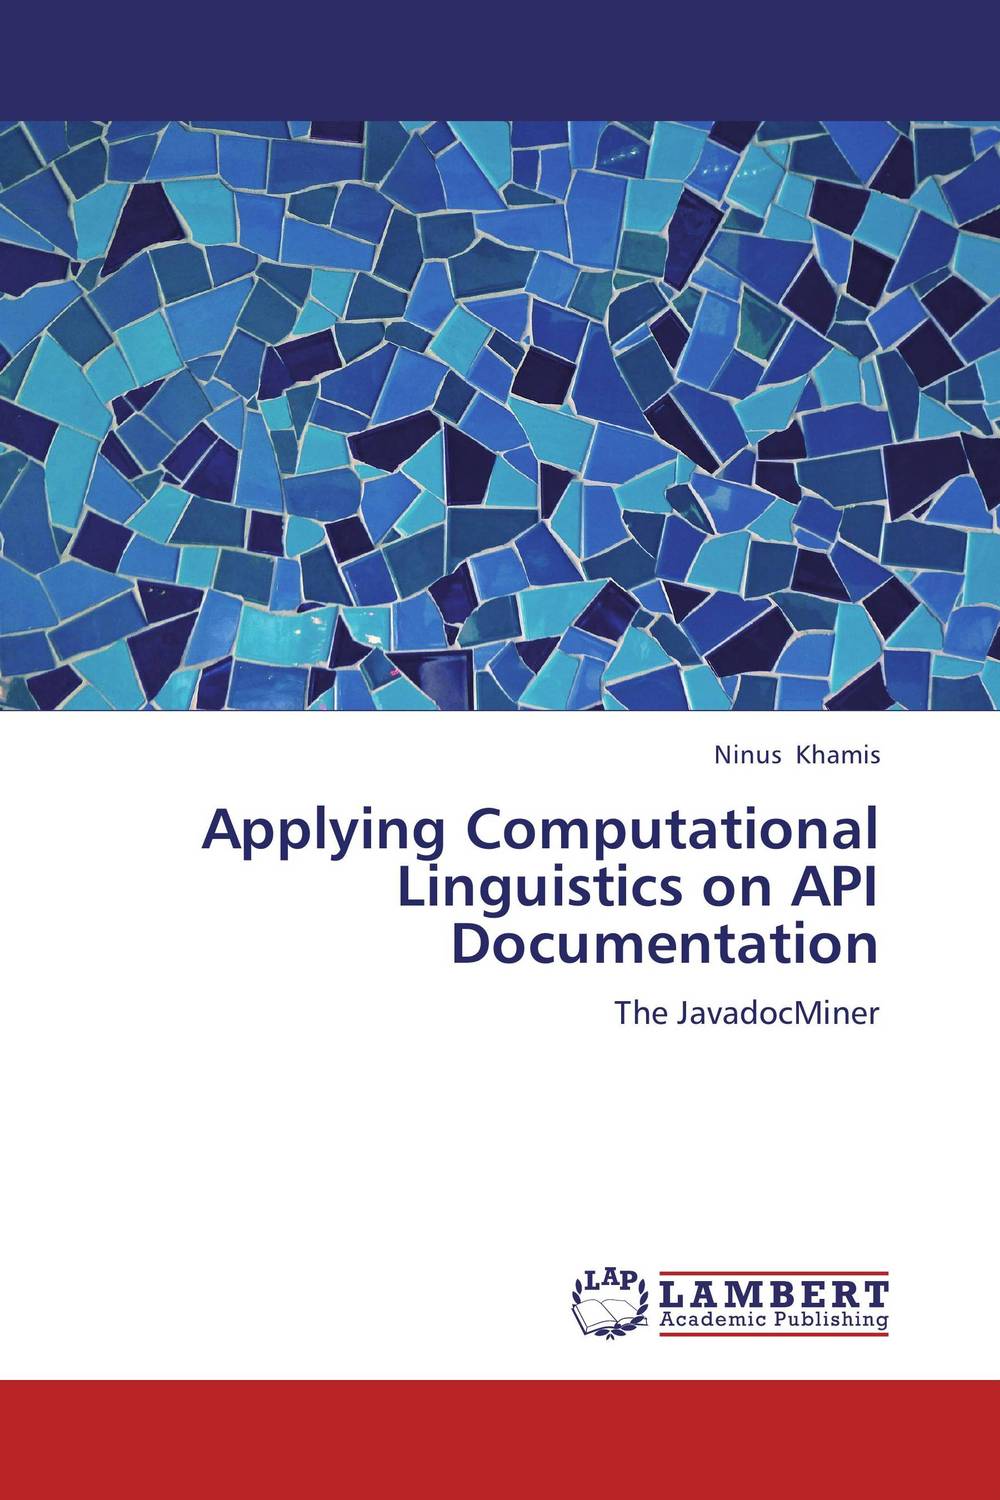 Applying Computational Linguistics on API Documentation